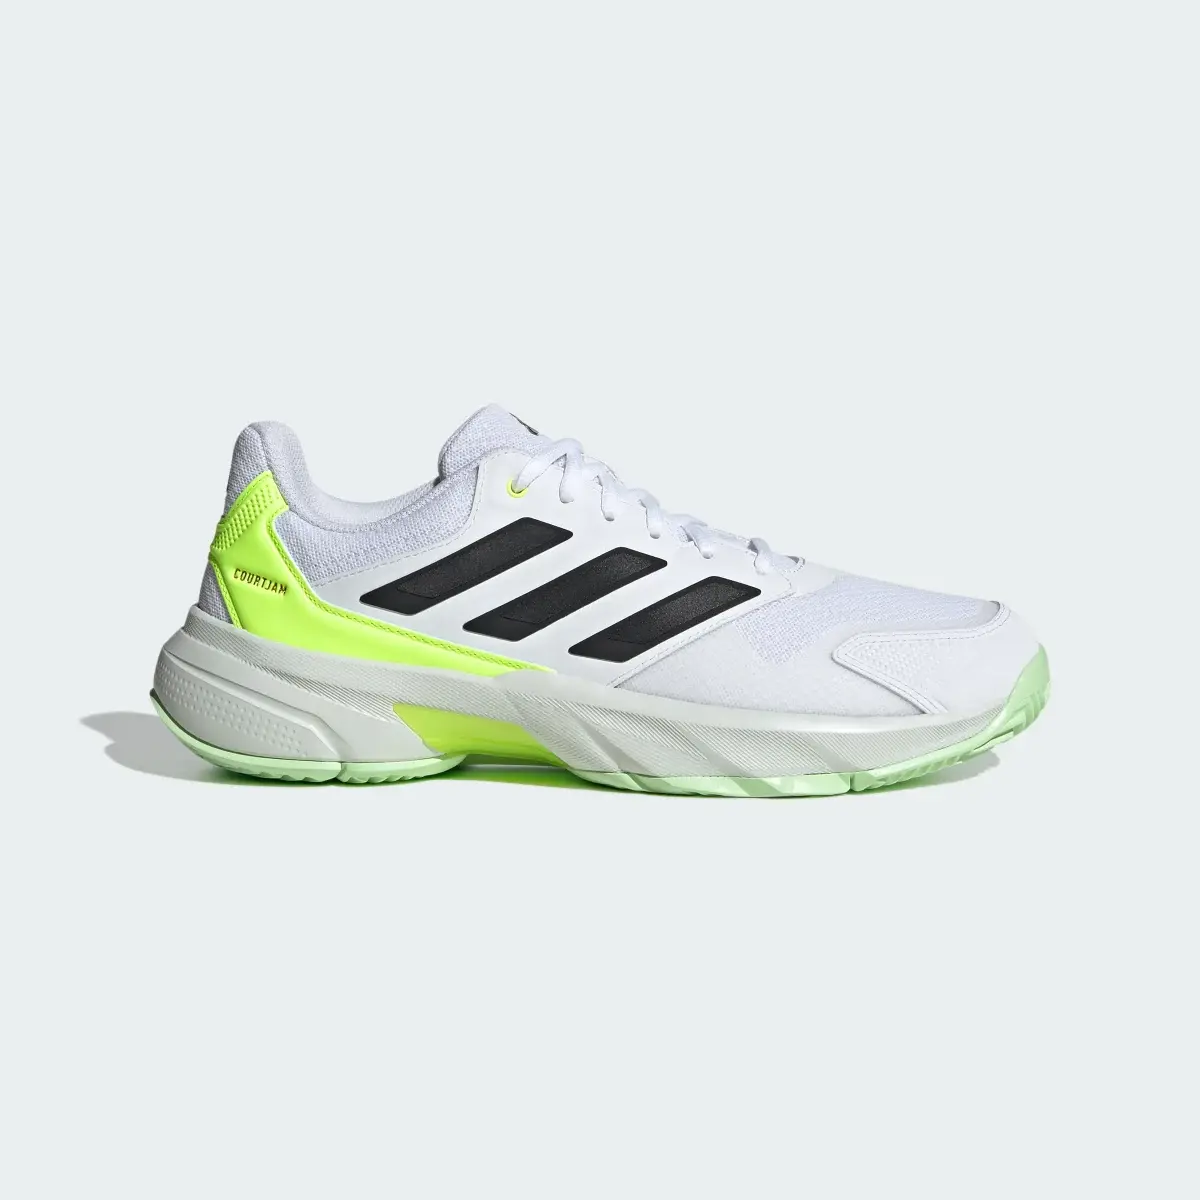 Adidas CourtJam Control 3 Tennis Shoes. 2